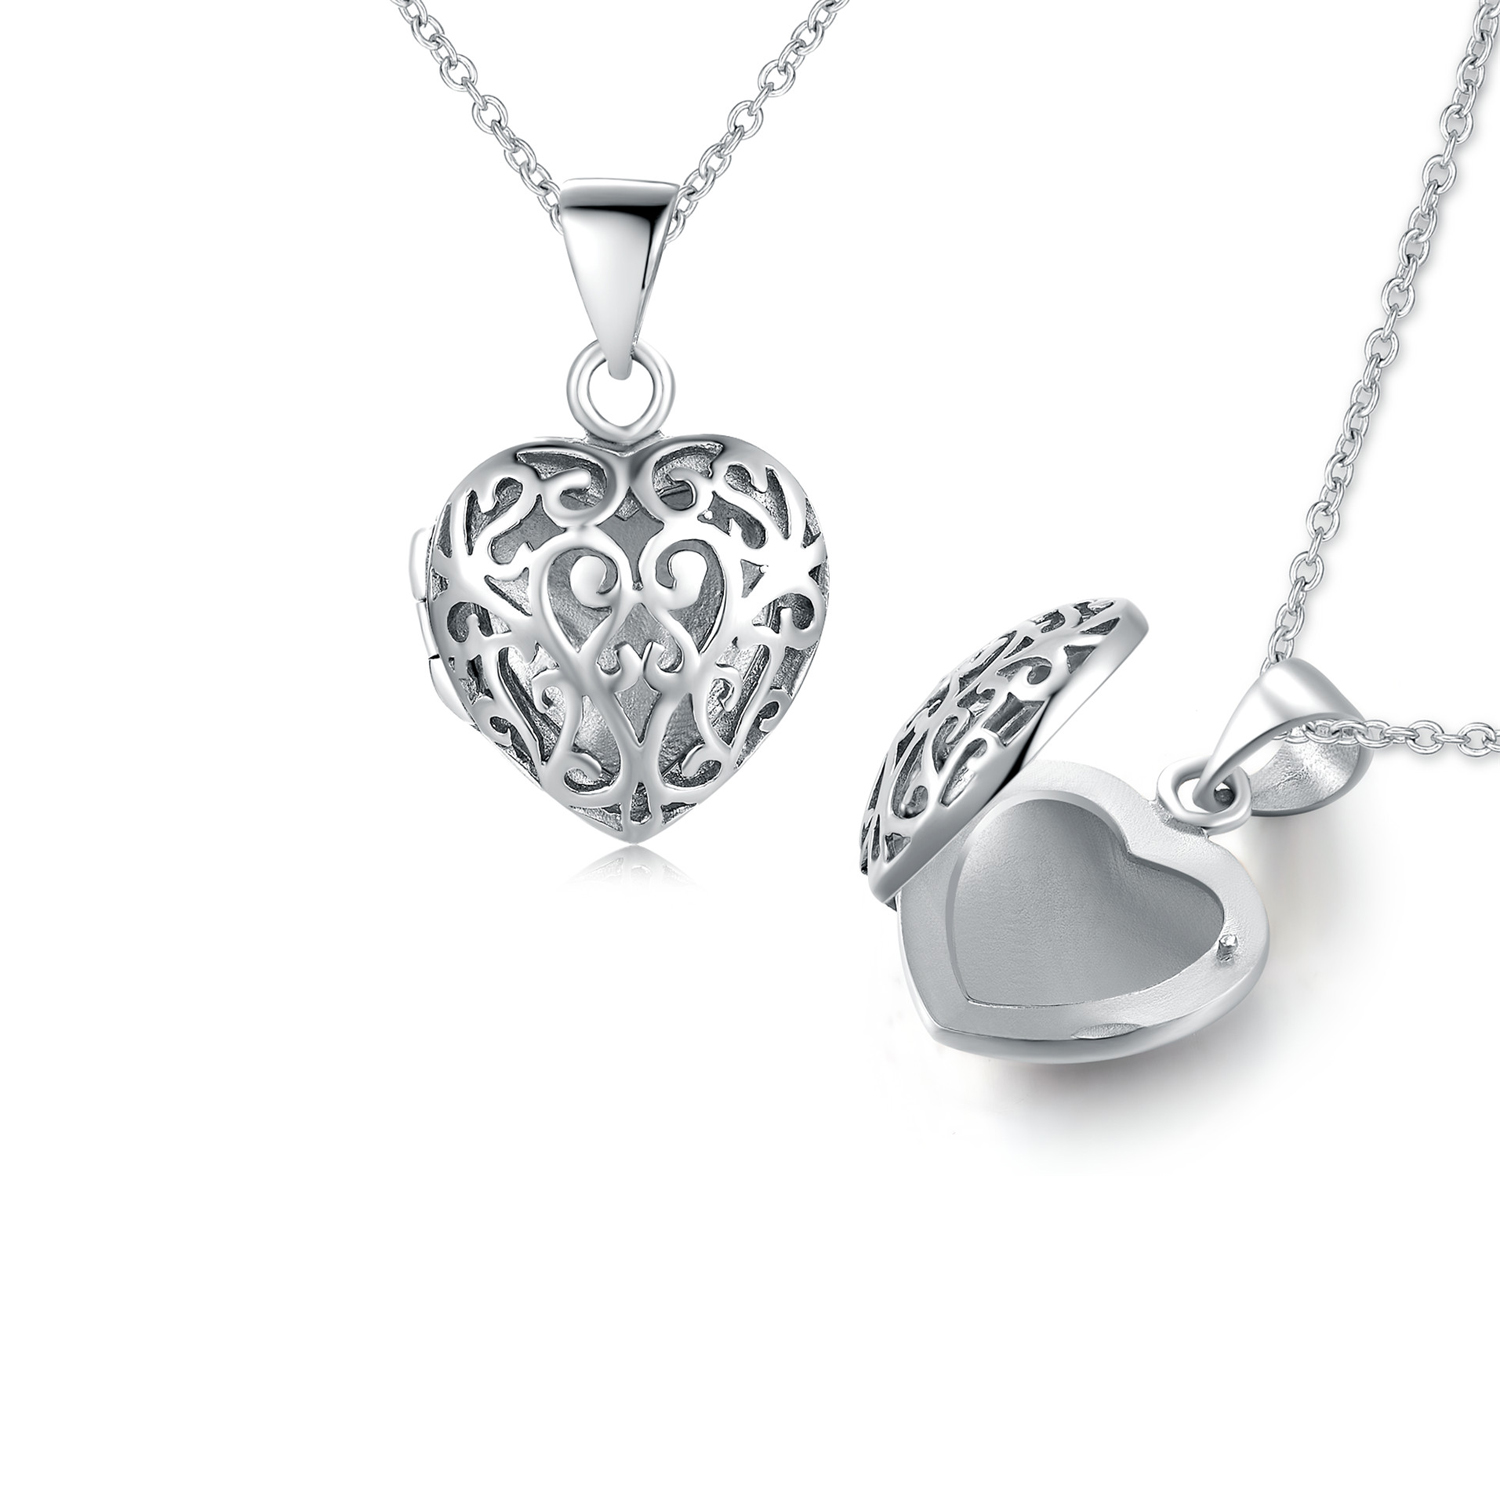  Manufacturer hot sale  925 Silver personalized Photo Locket hollow heart shape pendant necklace  (图3)